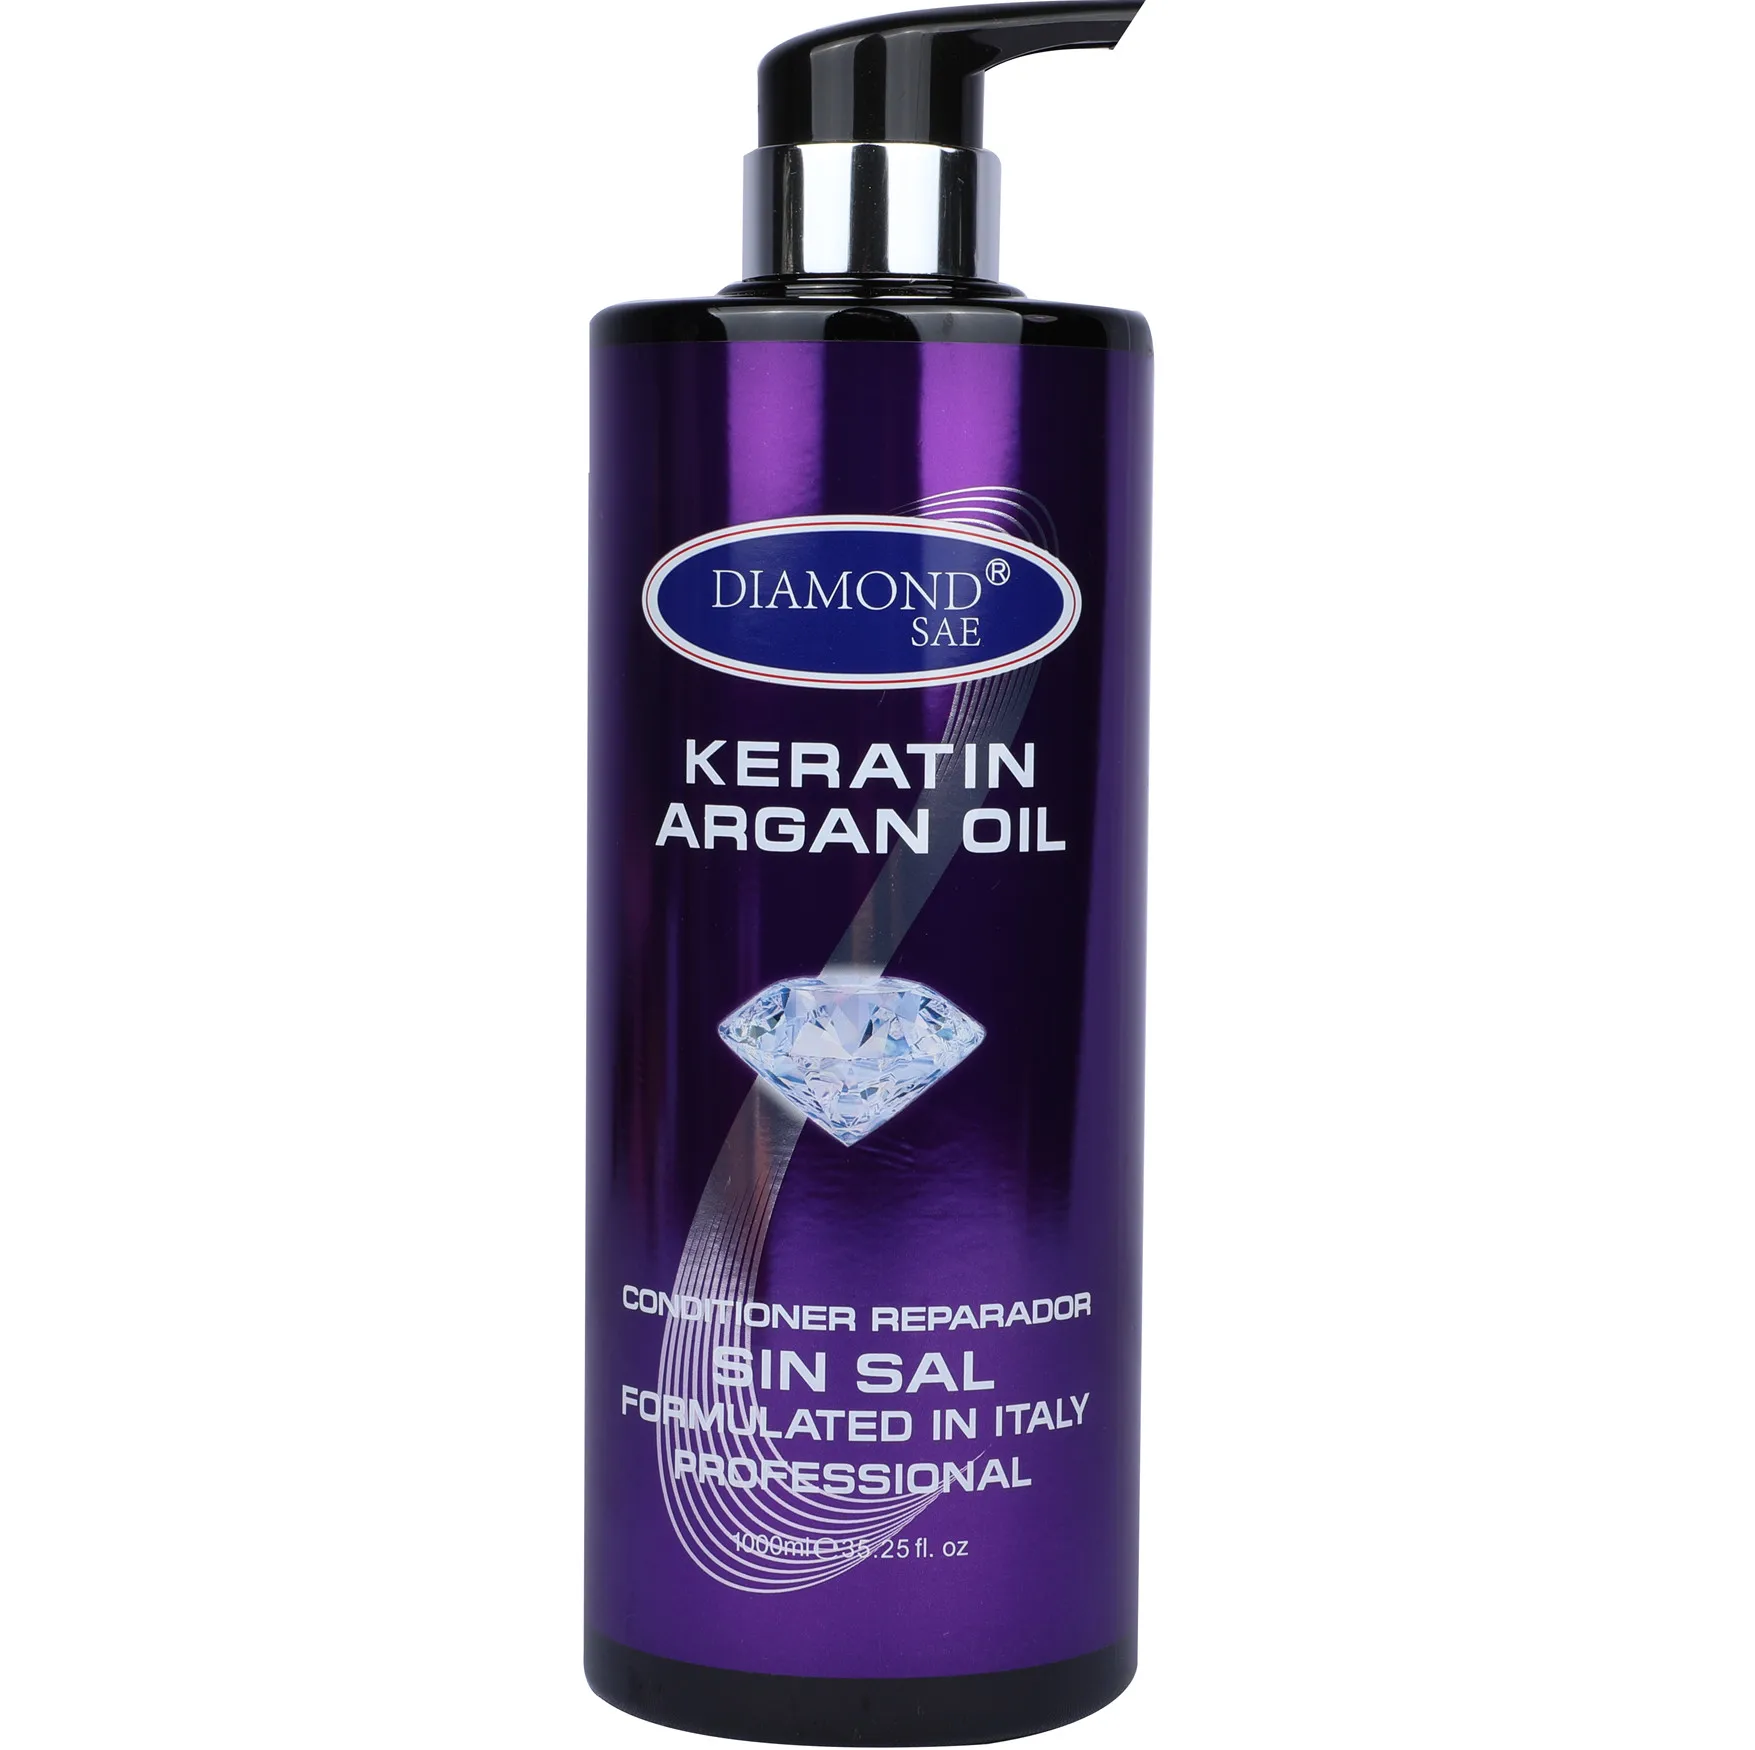 

ODM / OEM Private Label Professional Repair nourish Keratin Hair Care conditioner with argan oil